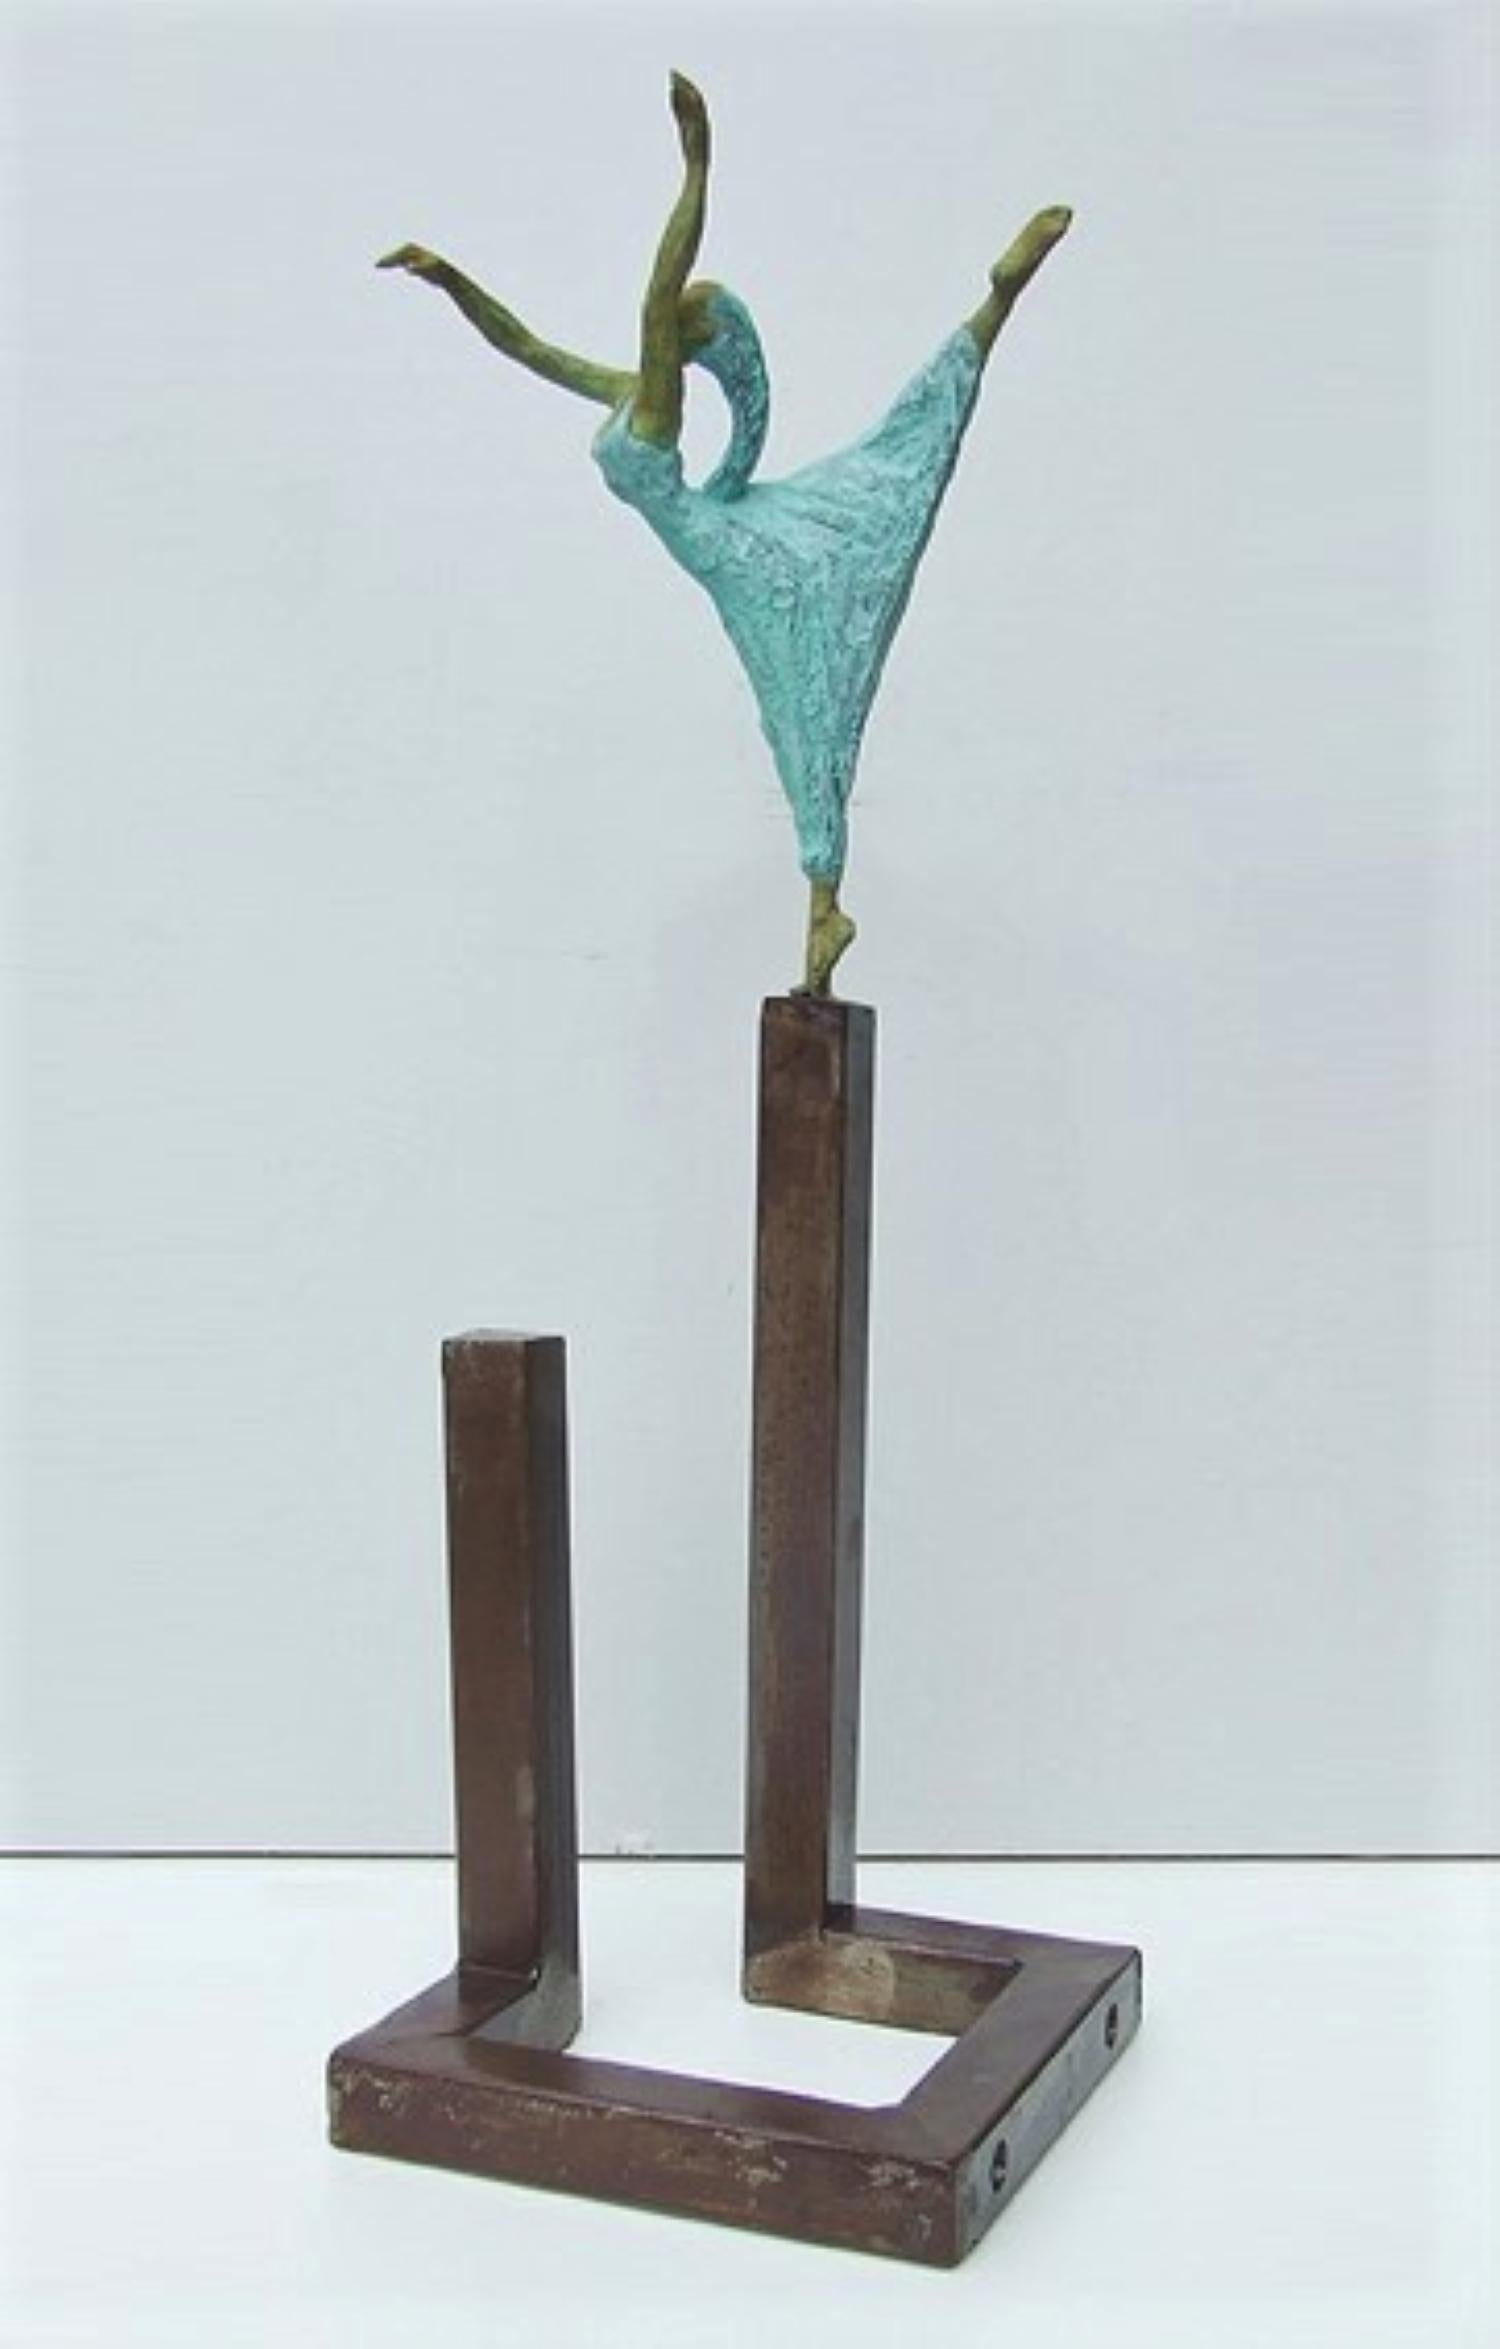 Joan Artigas Planas Figurative Sculpture - "Alicia Graf" contemporary bronze table, mural sculpture figurative dancing 